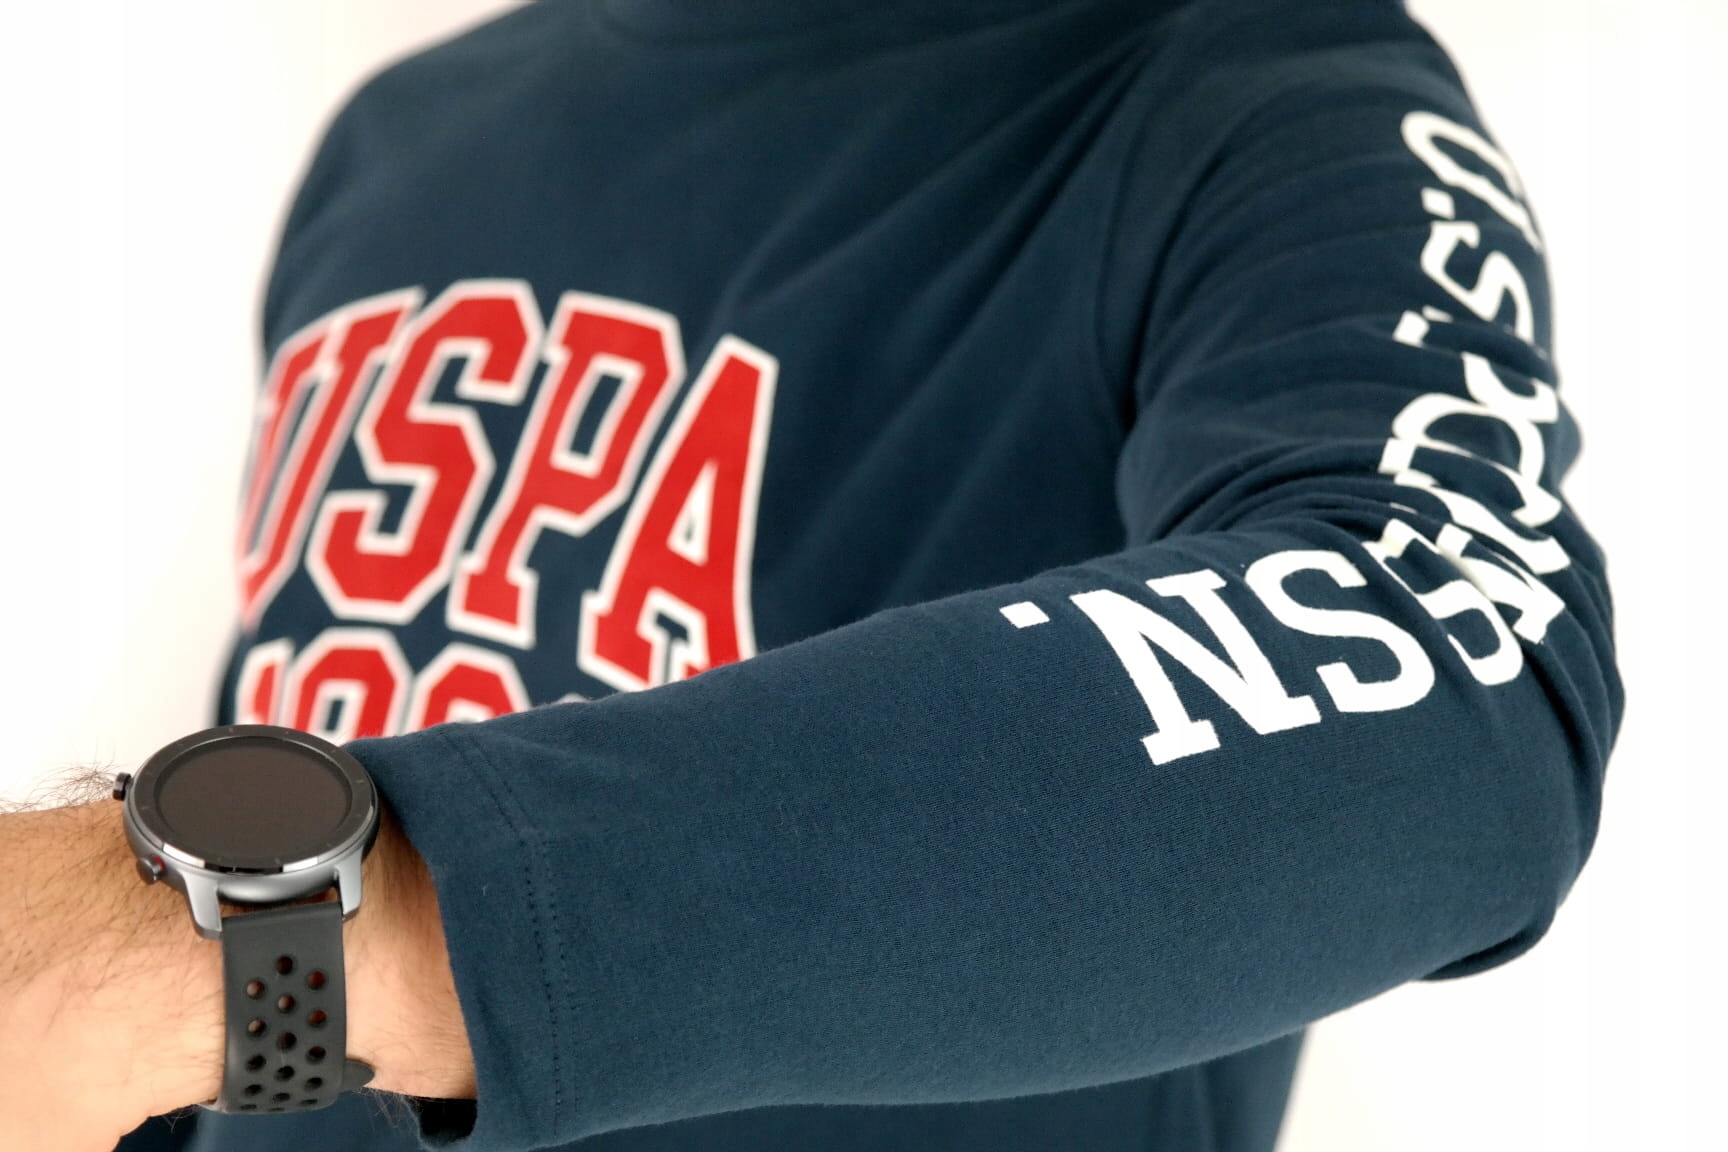 U. S POLO ASSN. longsleeve мужская футболка темно-синий XXL шаблон доминирующий логотип